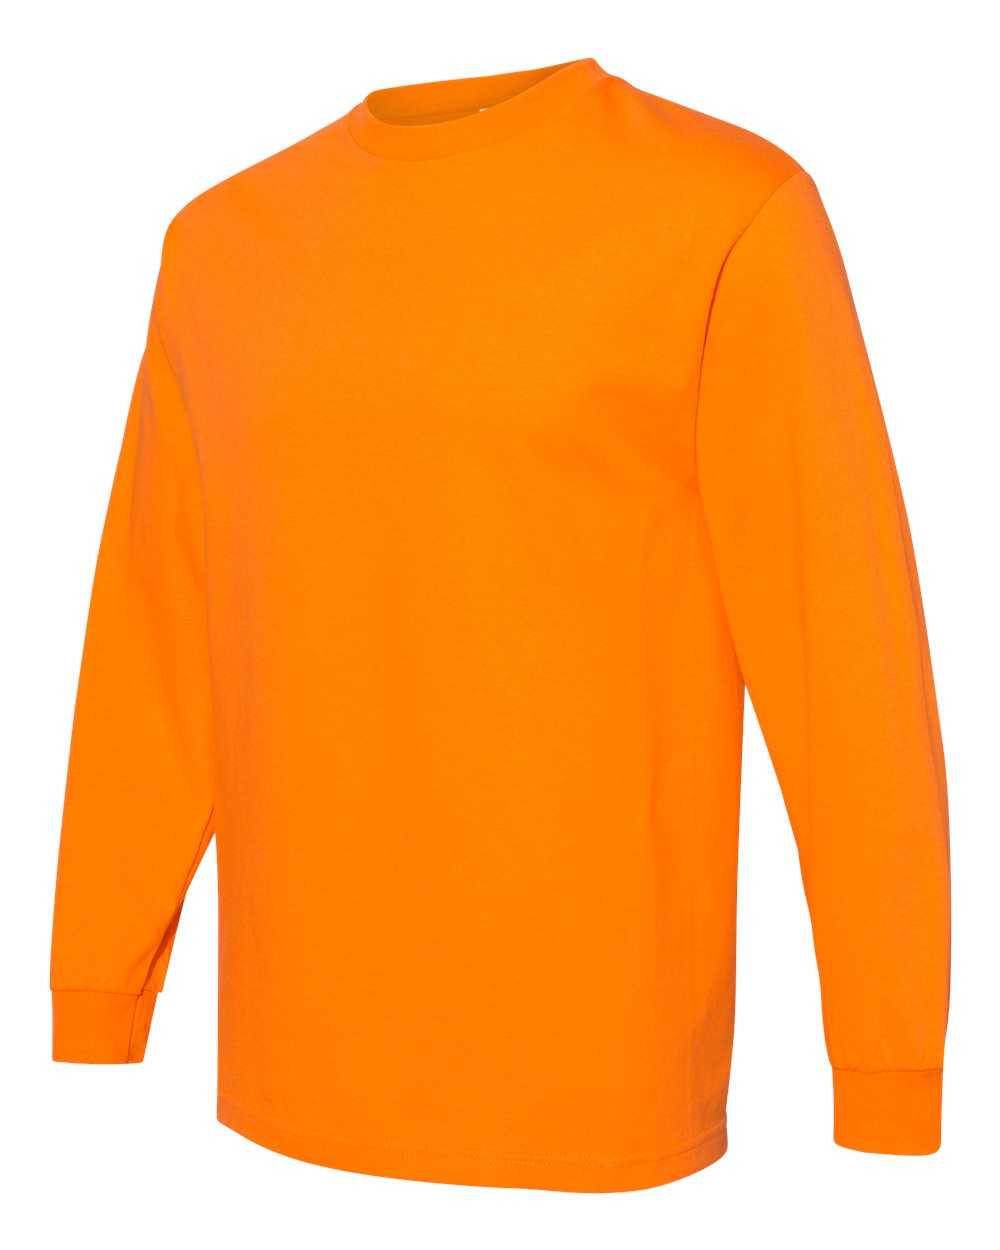 American Apparel 1304 Unisex Heavyweight Cotton Long Sleeve T-Shirt - Orange - HIT a Double